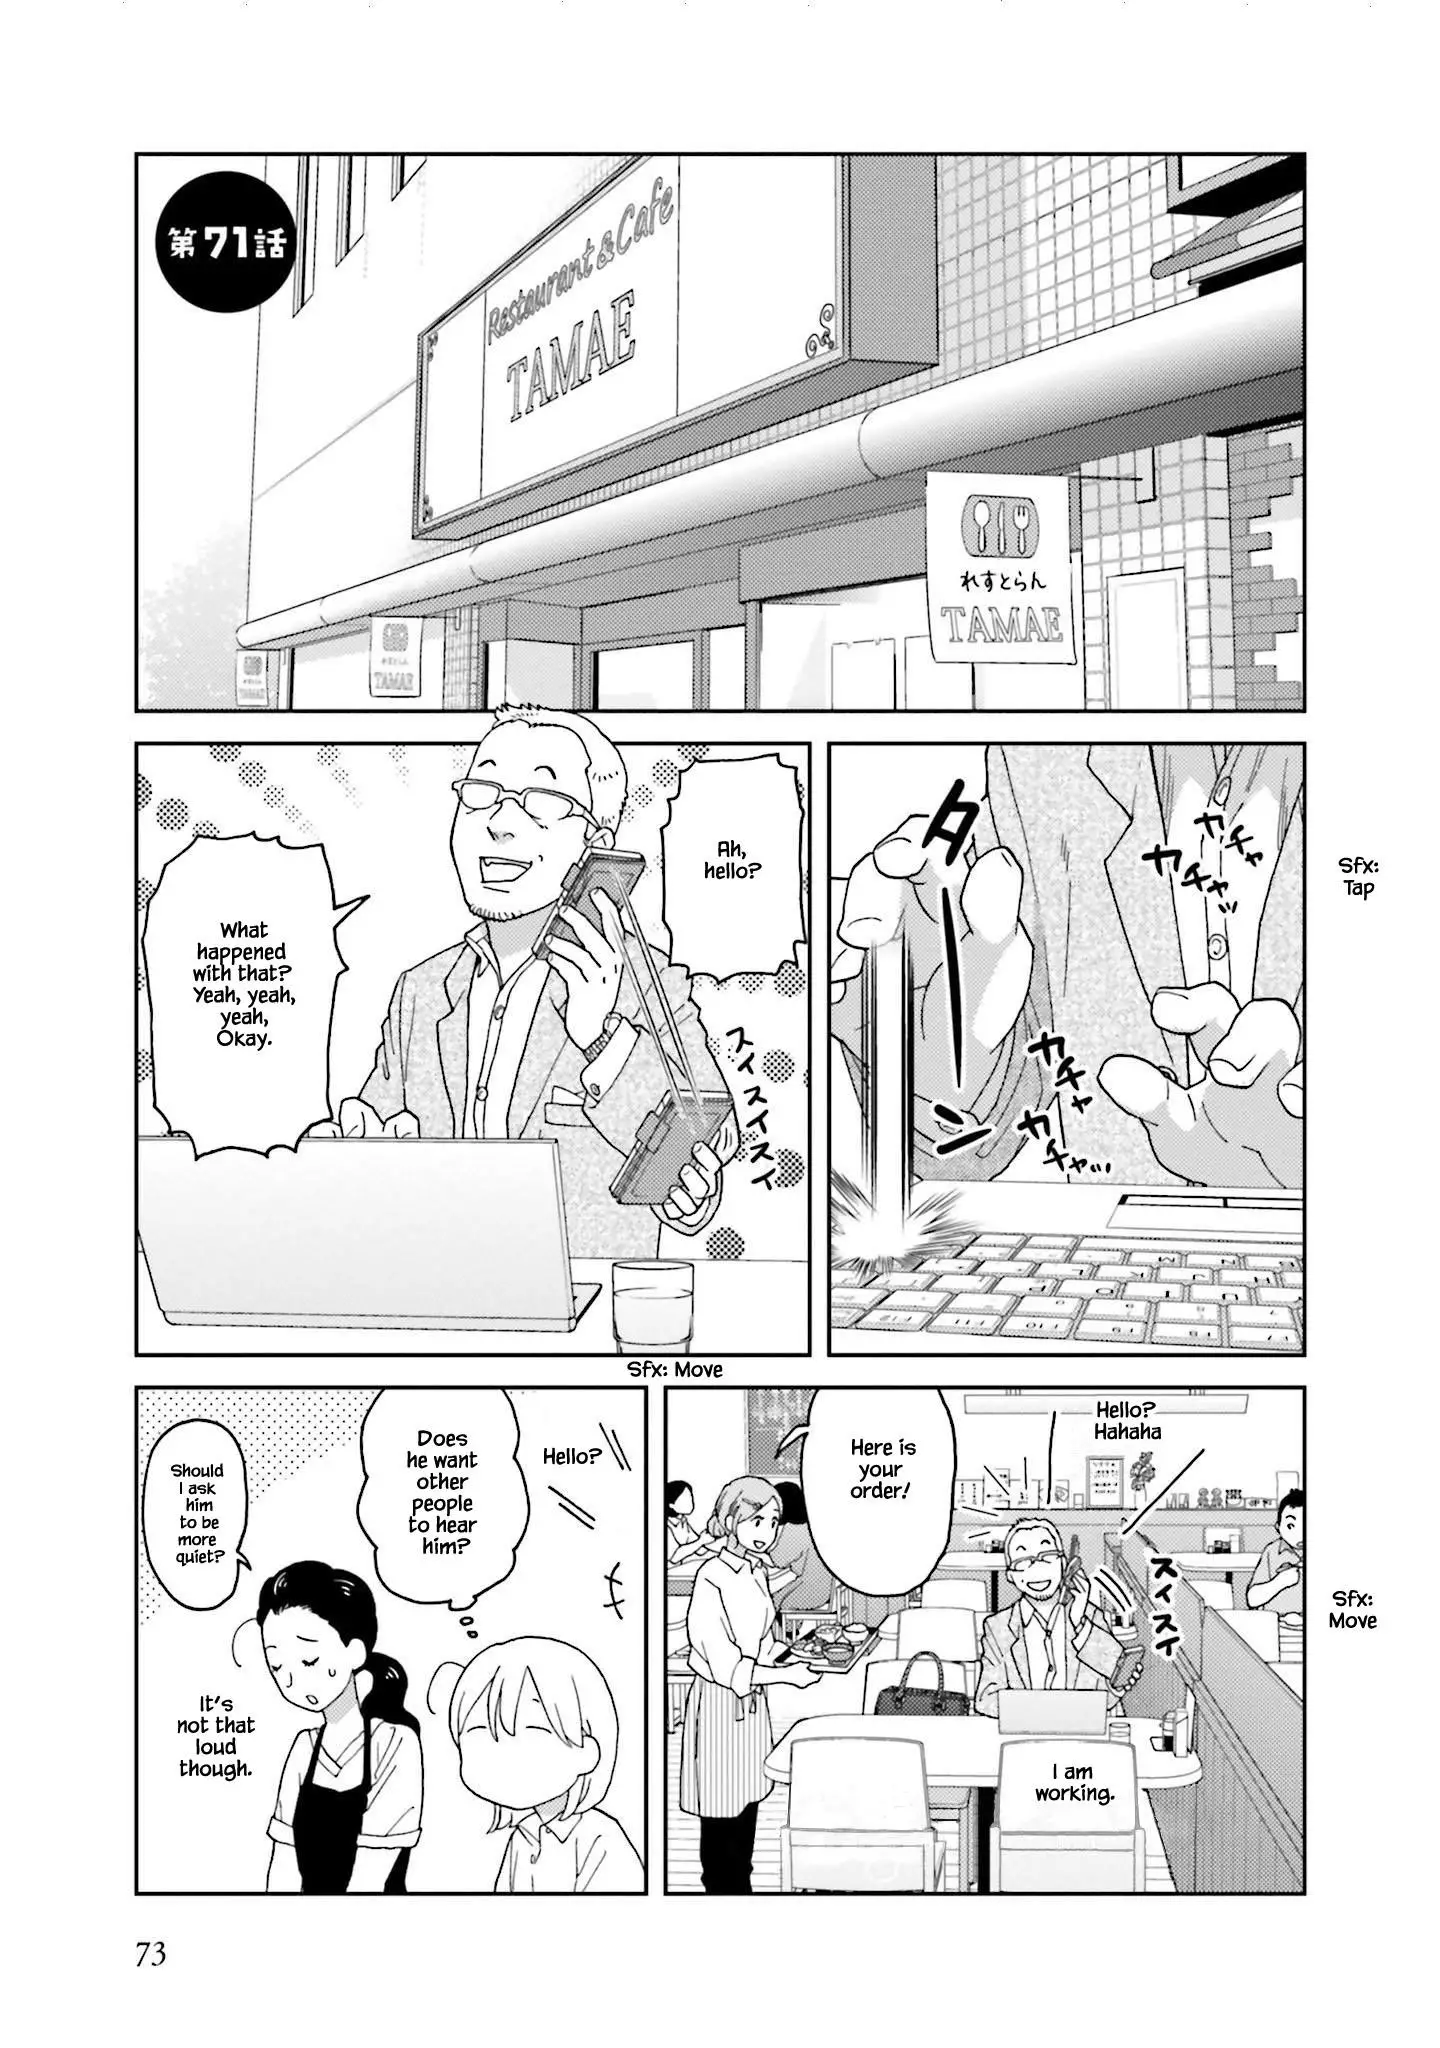 Takako-San - 71 page 1-b2bb48c1